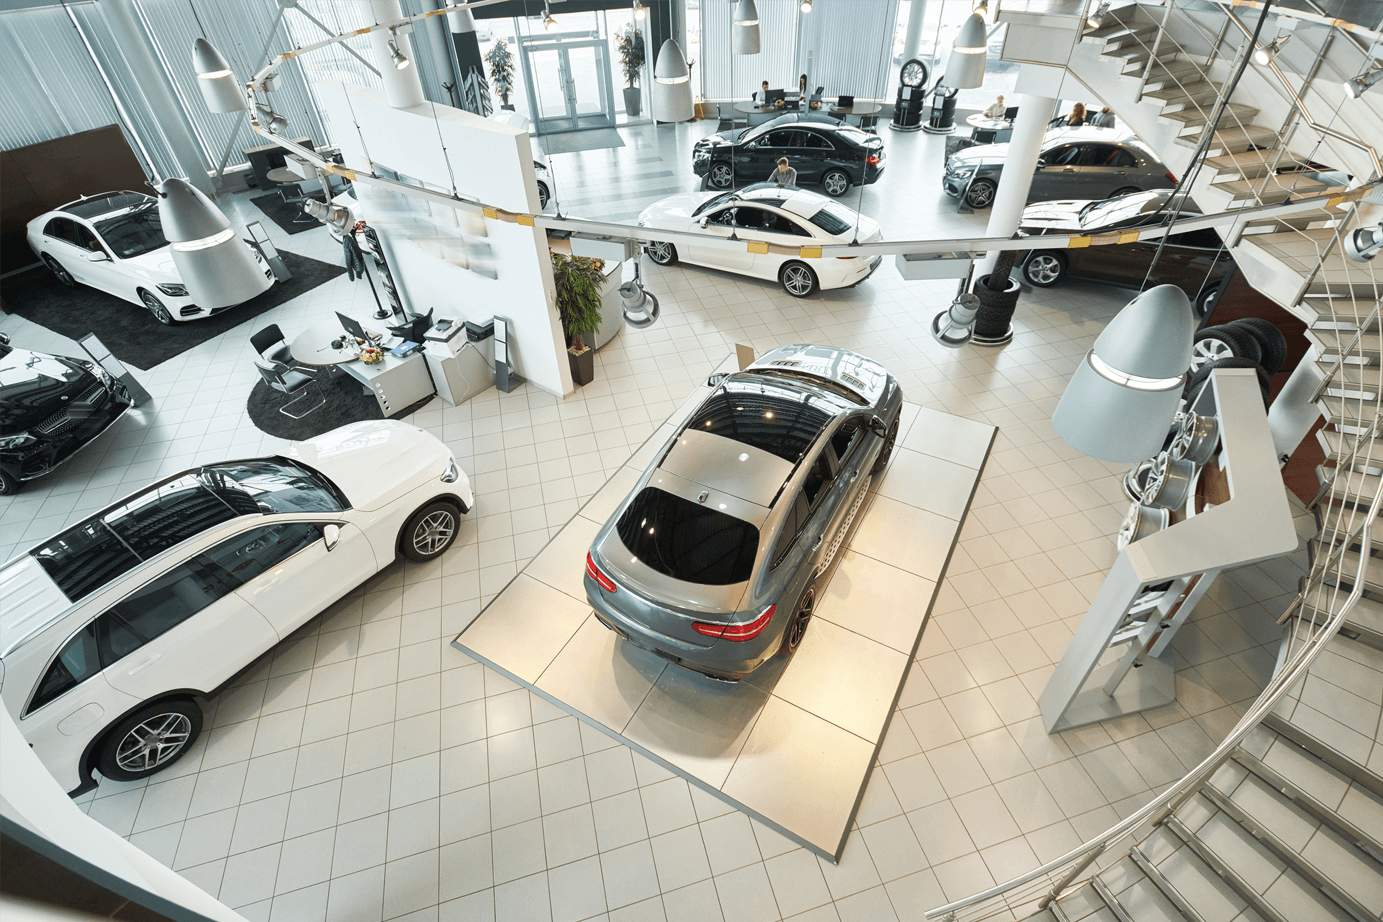 Inside a car showroom